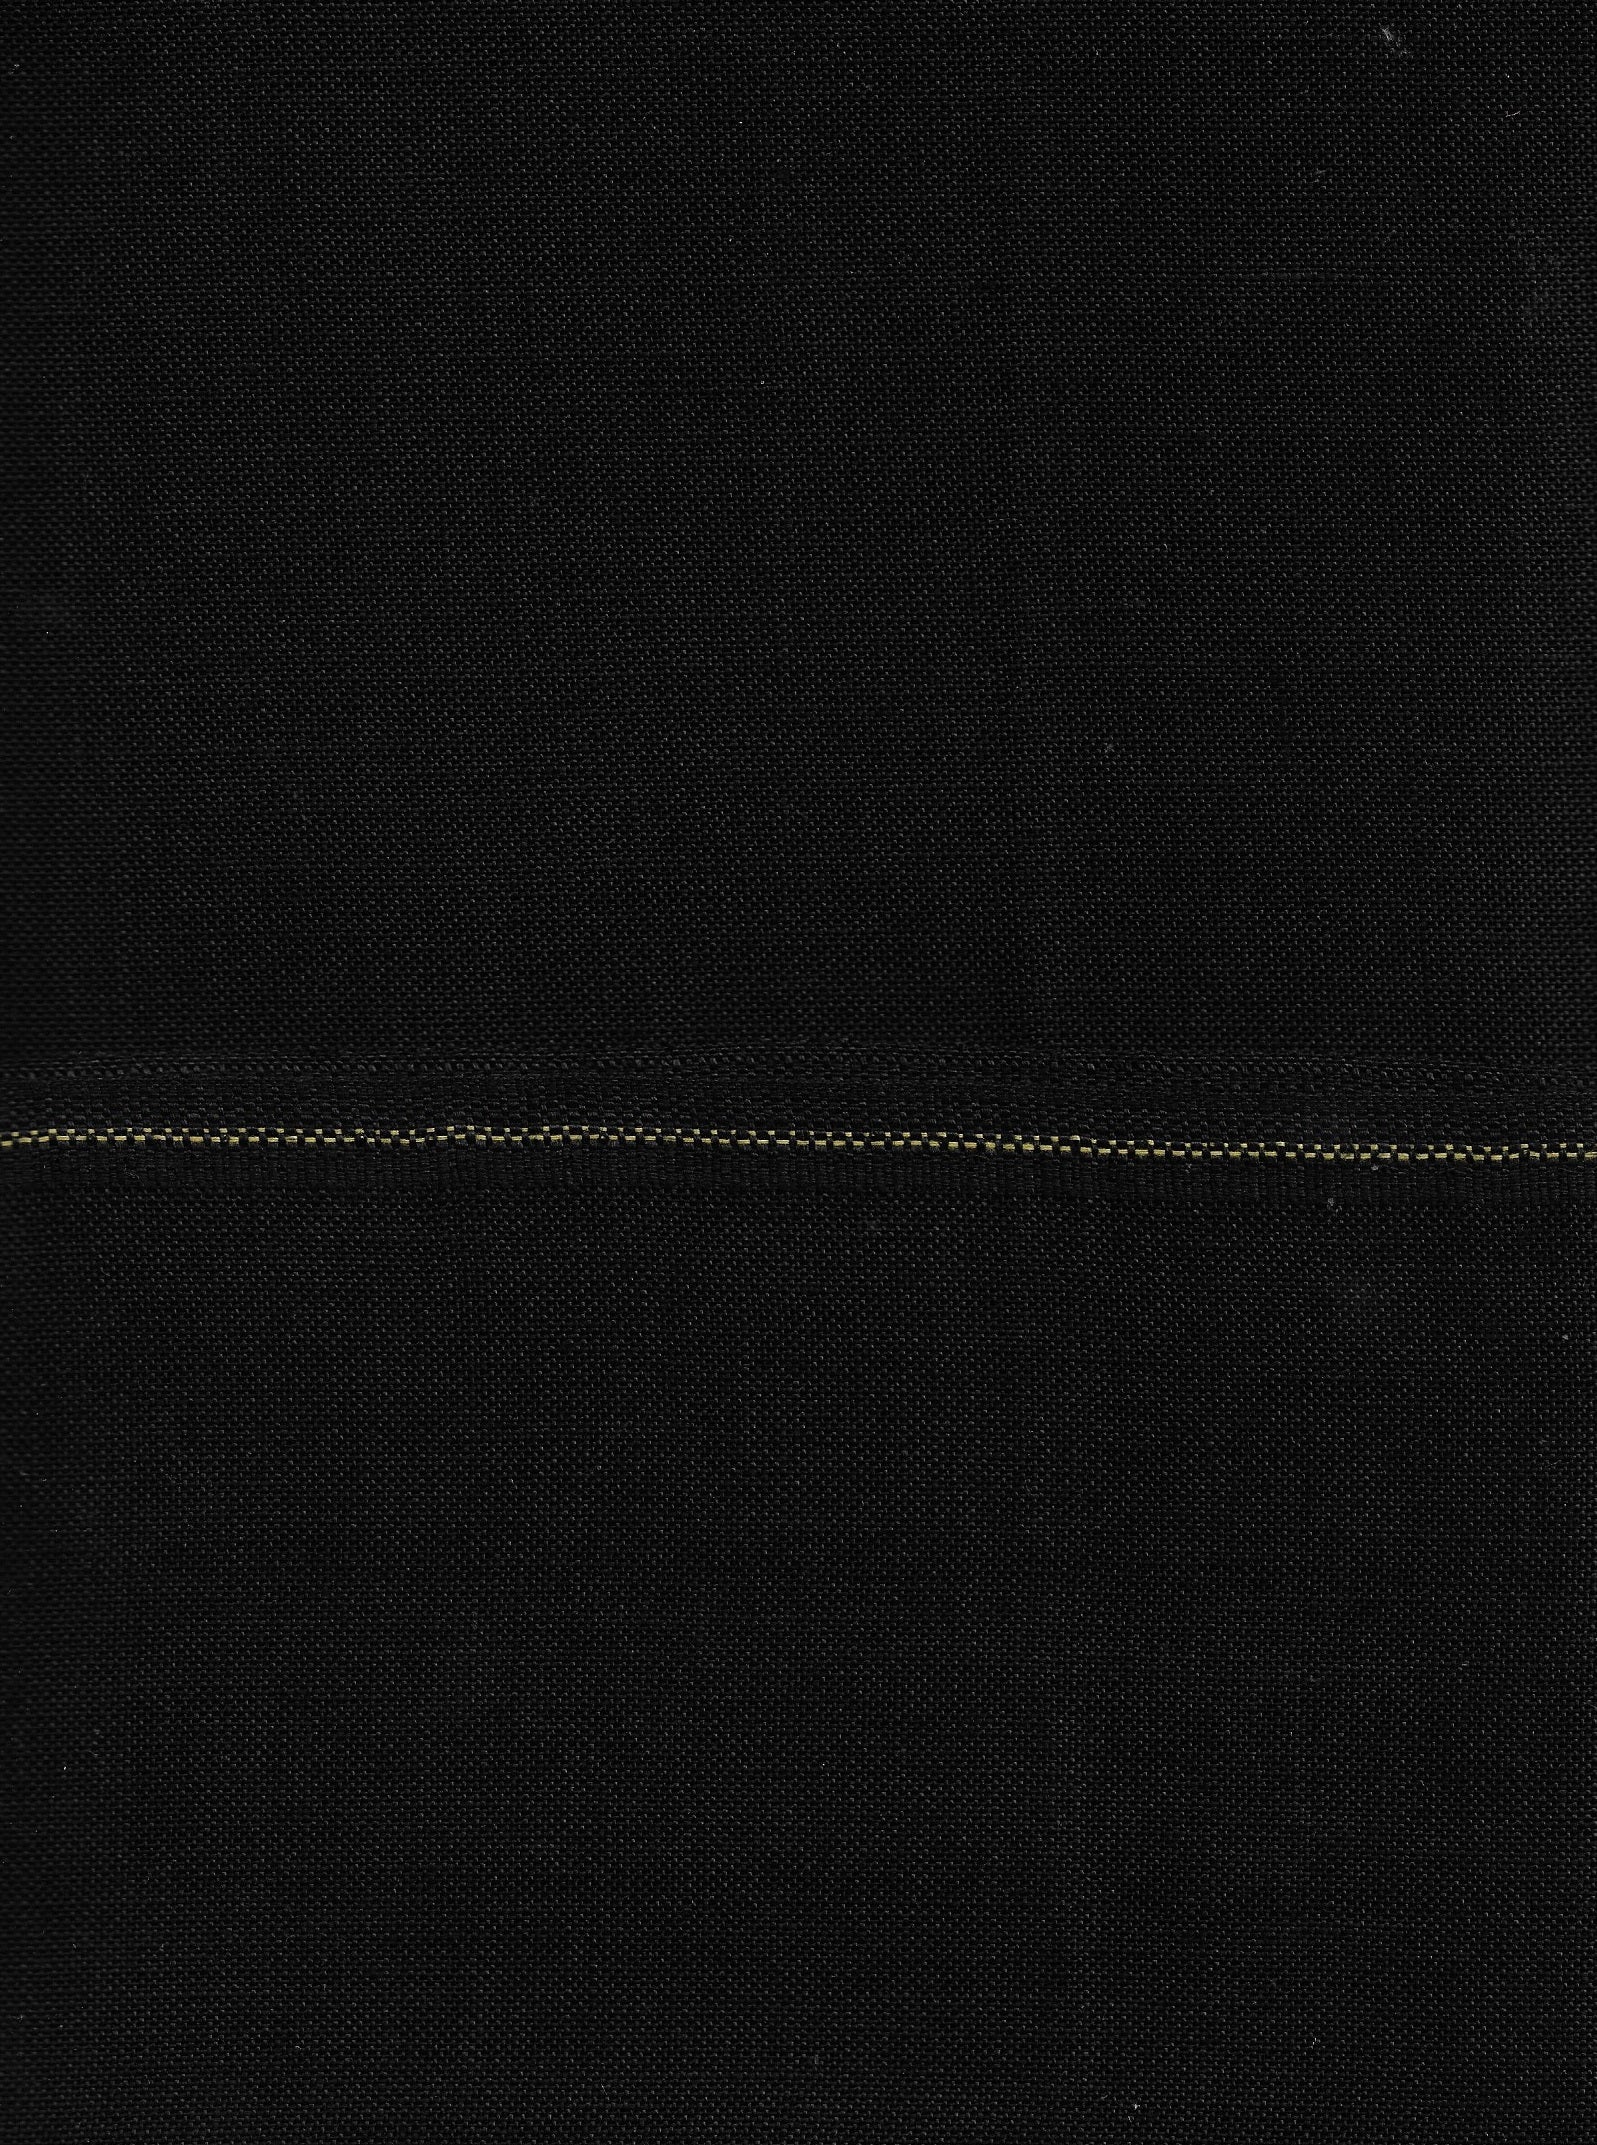 Zweigart Belfast 32ct 18x27 Black cross stitch fabric